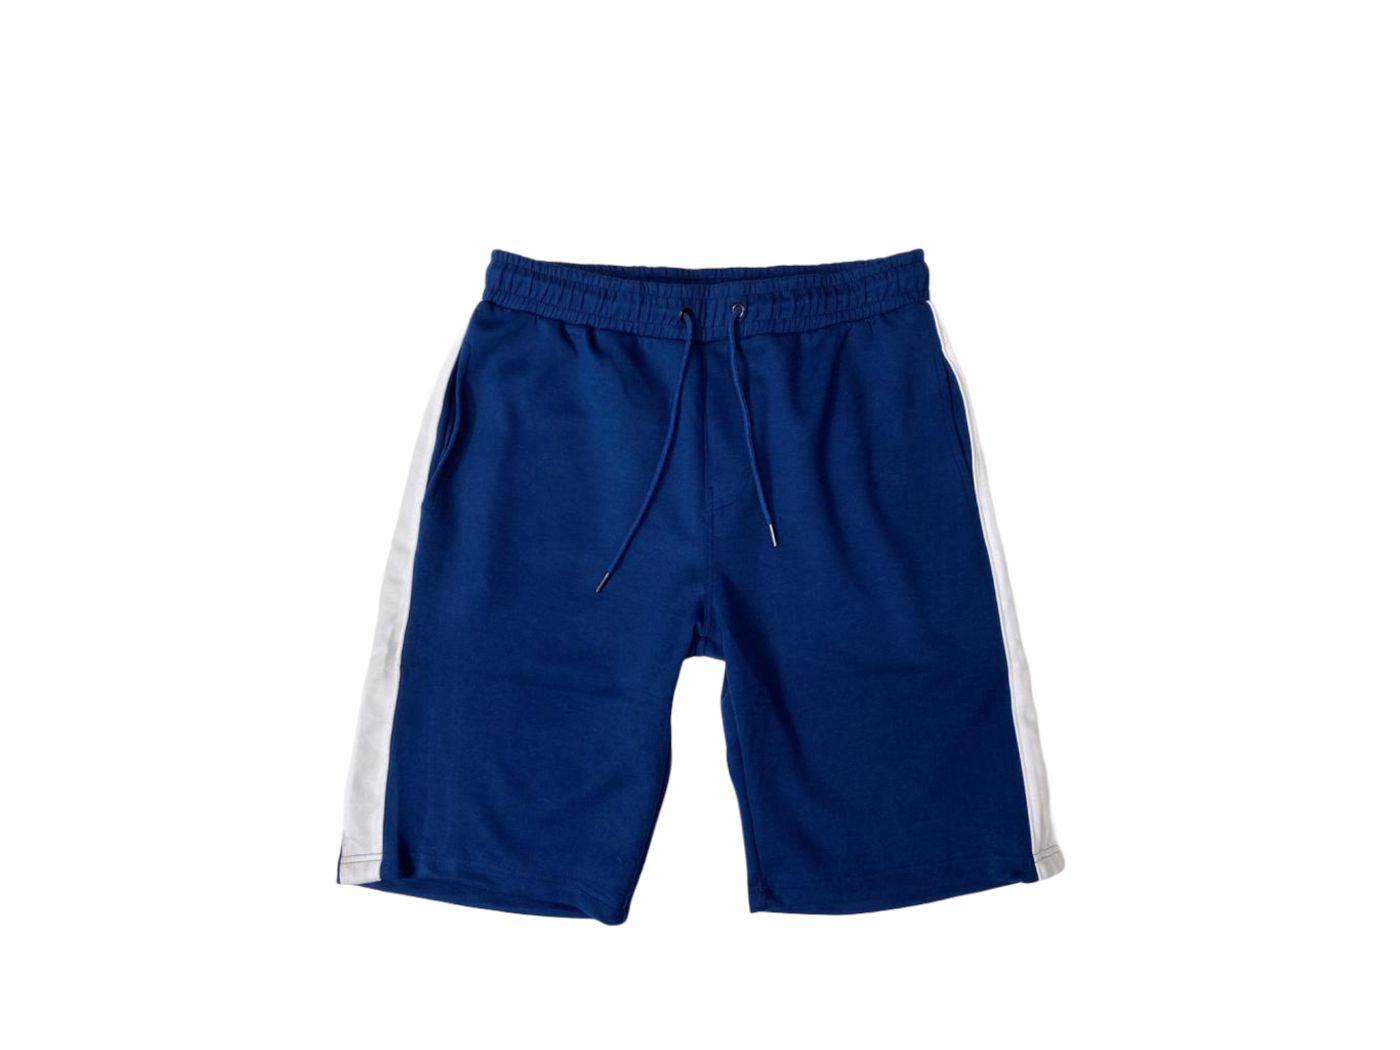 Navy Blue & White Tech Shorts